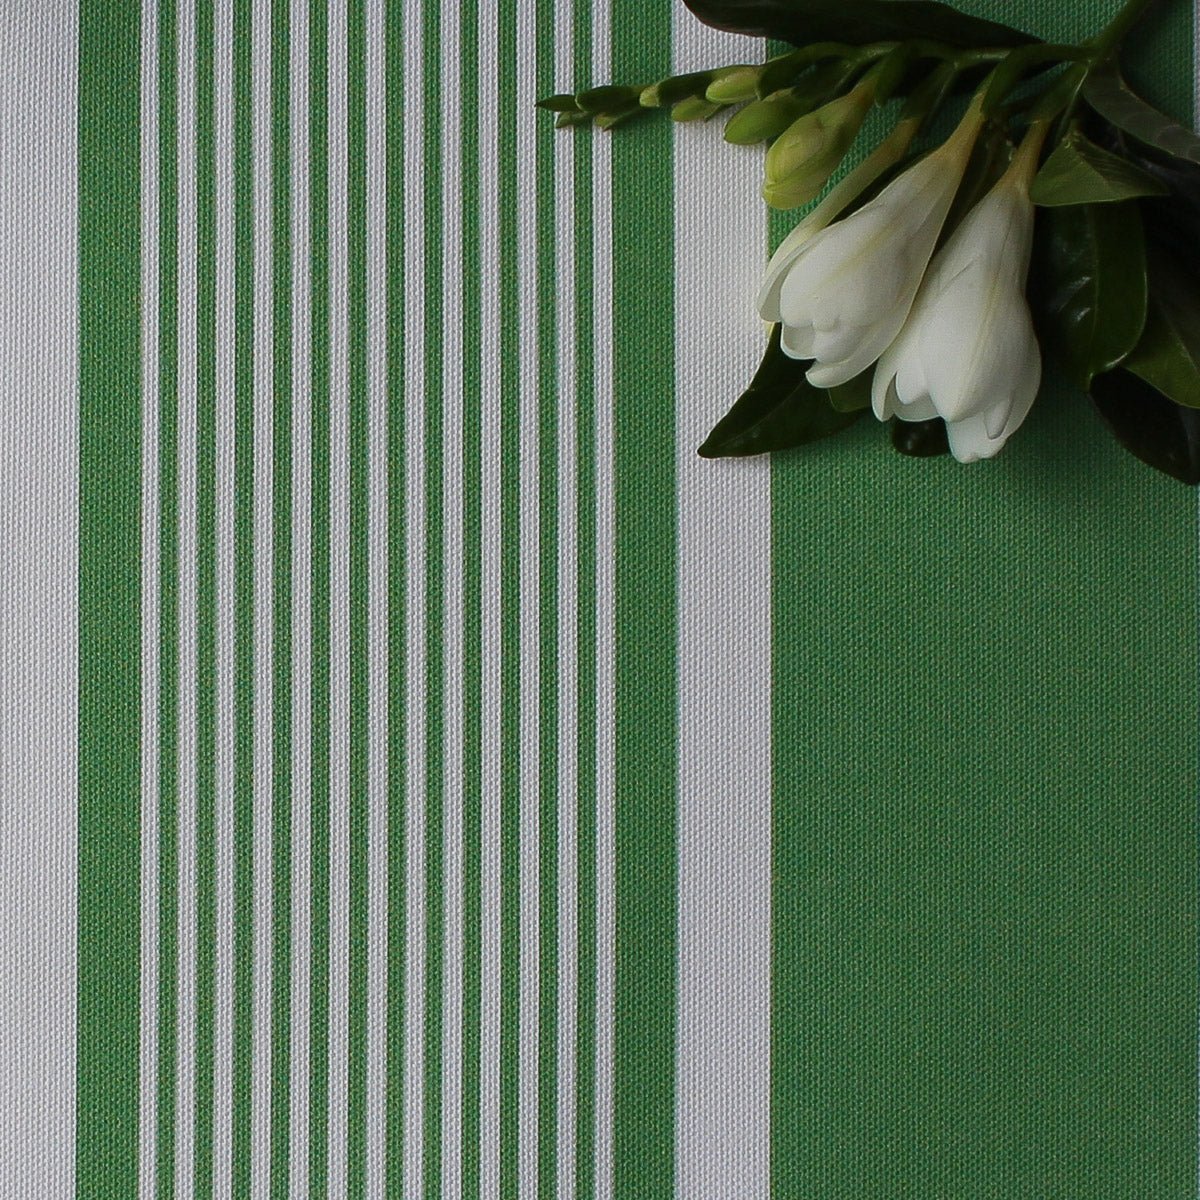 Deckchair Stripe Fabric - Emerald - Hydrangea Lane Home